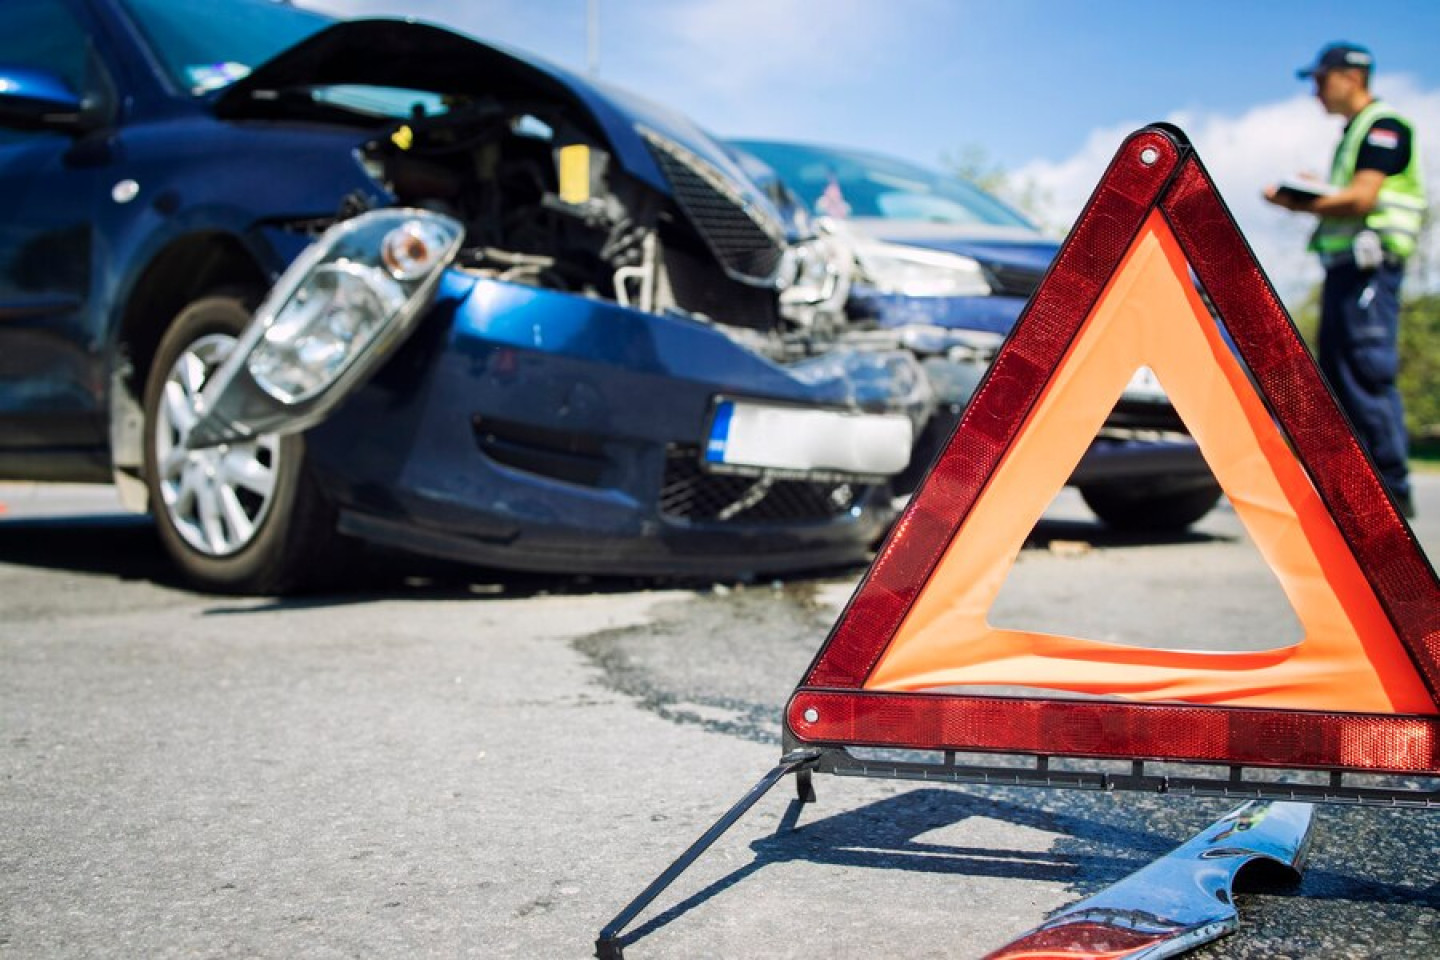 accidente-trafico-coches-destrozados_342744-677